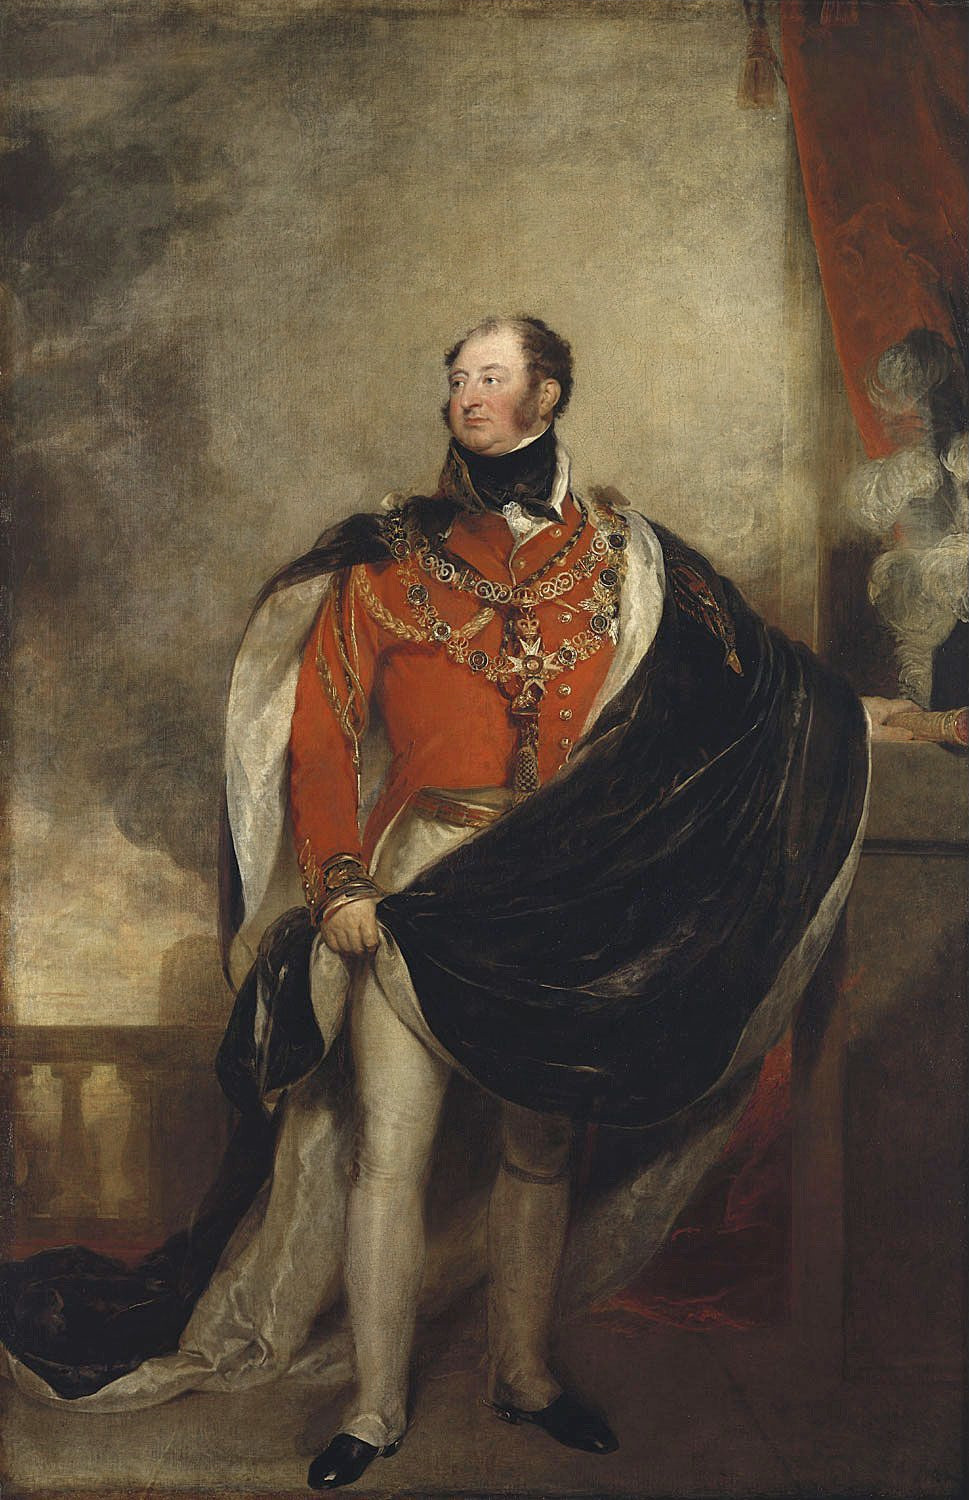 Prince Frederick, Duke of York and Albany - Wikipedia